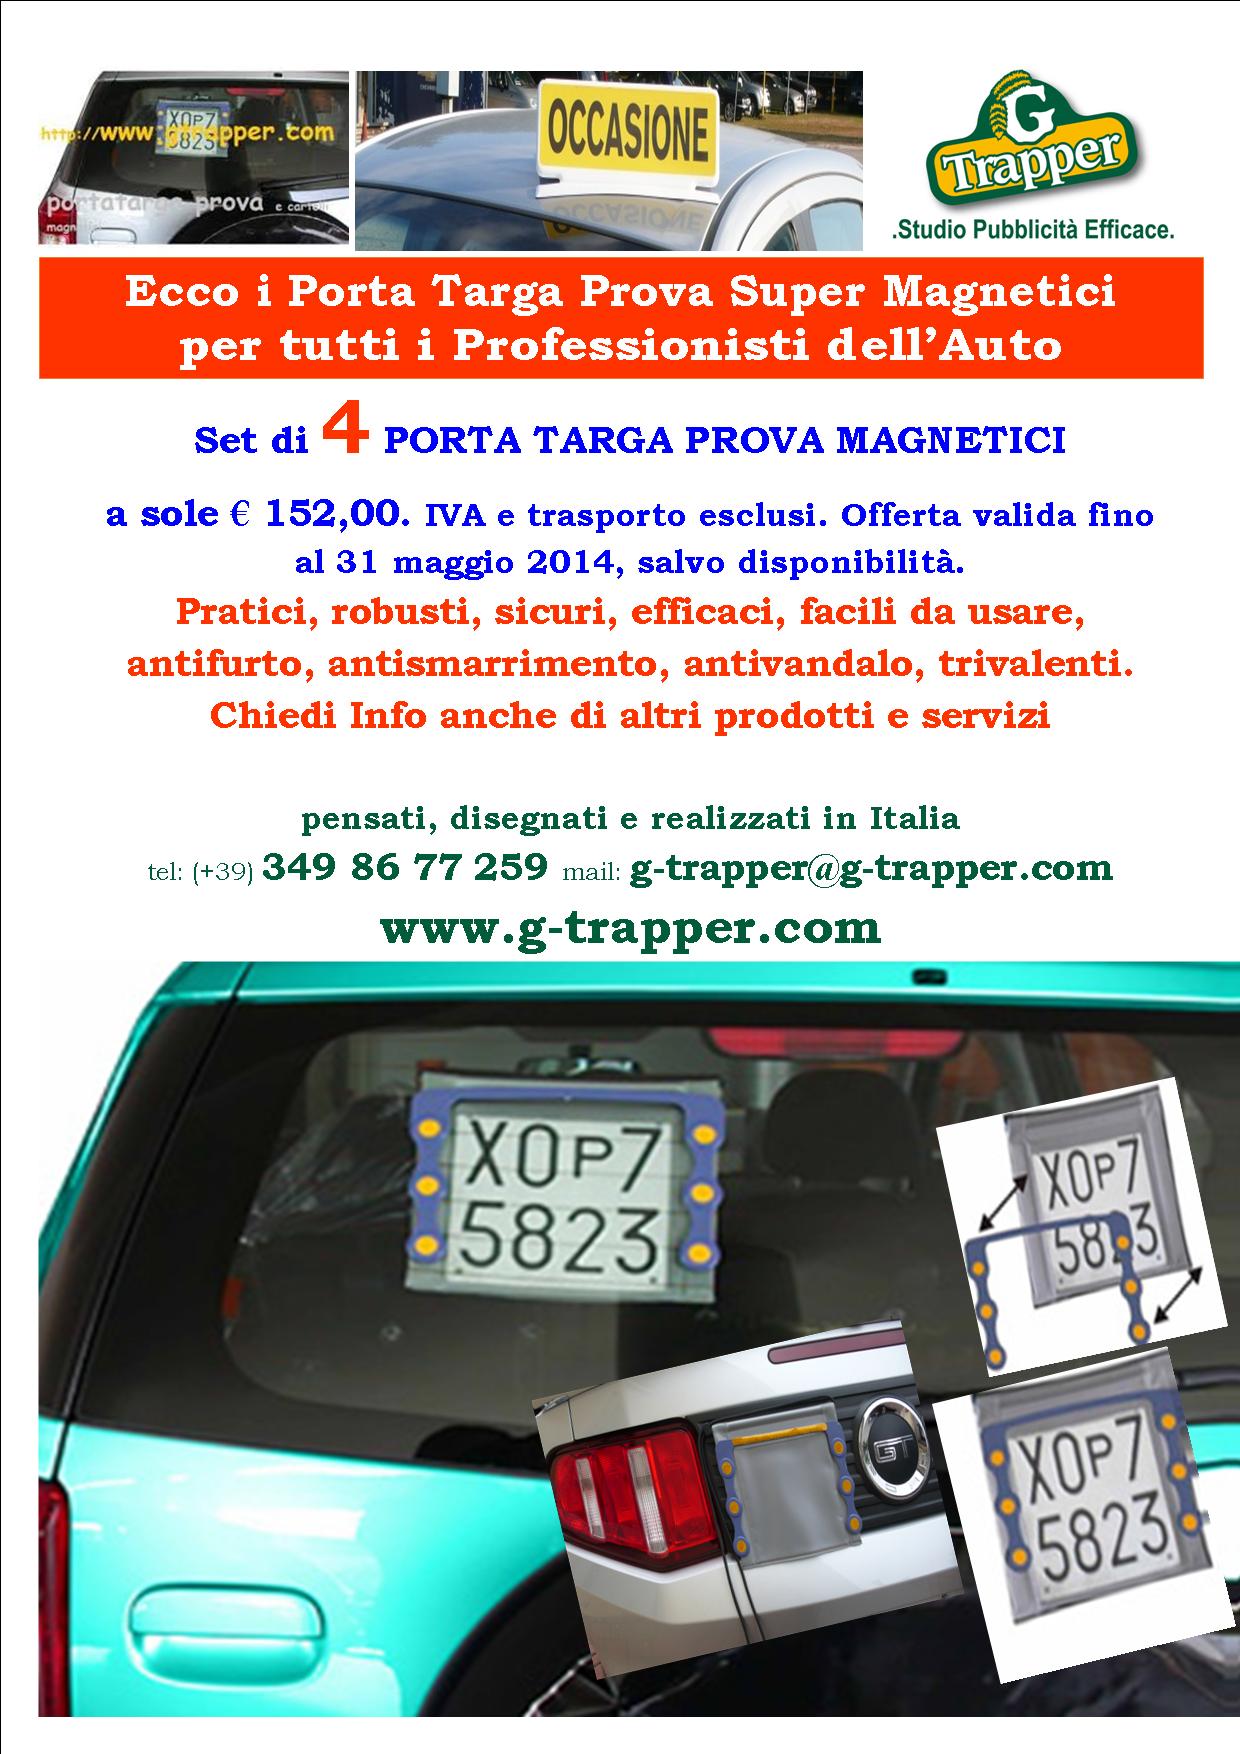 http://www.g-trapper.com/wp-content/uploads/2014/03/porta-targa-prova-magnetici-4-pezzi-www.g-trapper.com-tel-3498677259.jpg